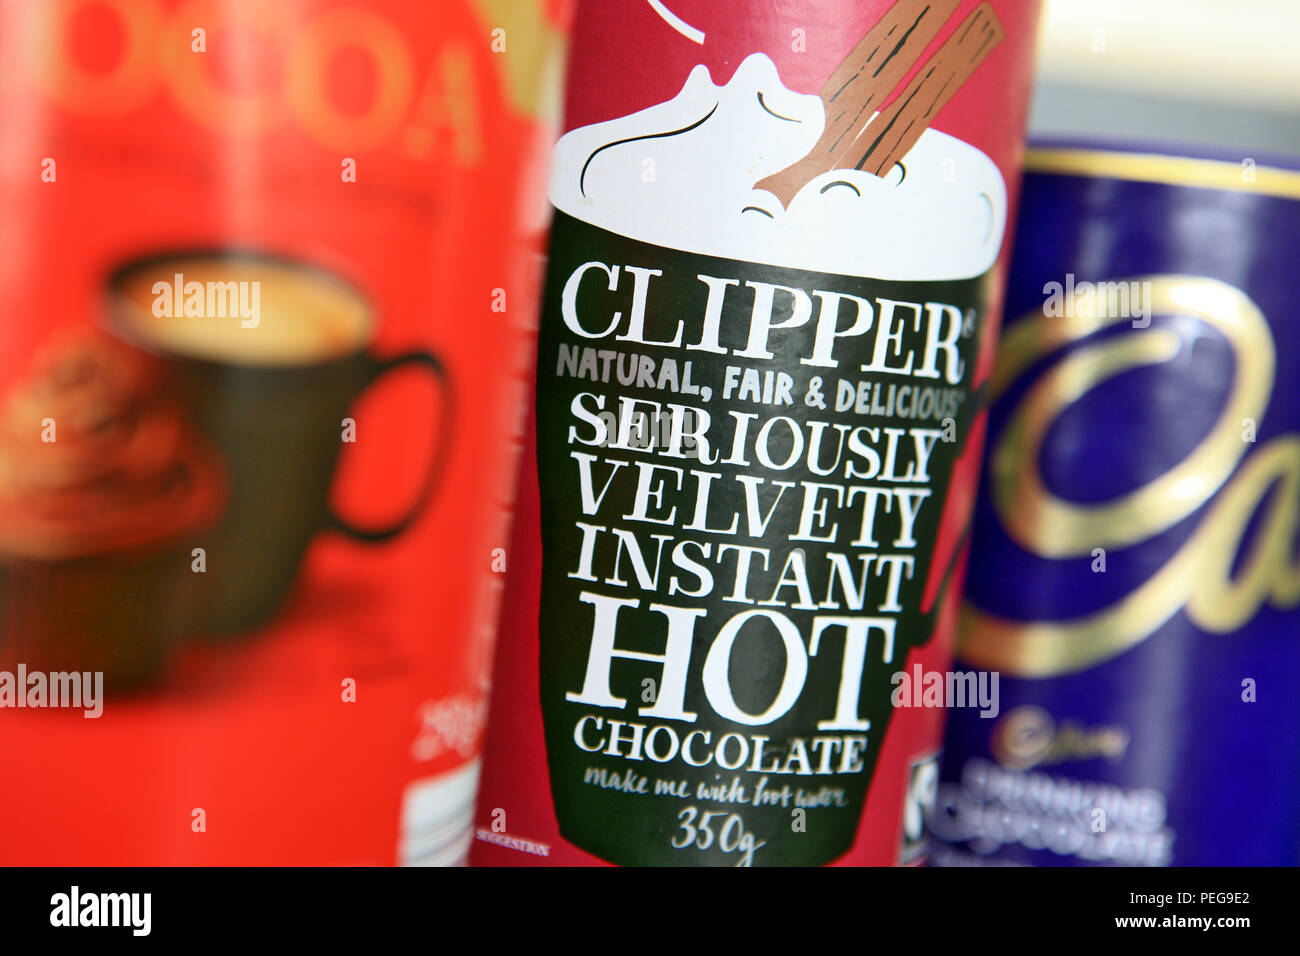 Hot chocolate brands Stock Photo